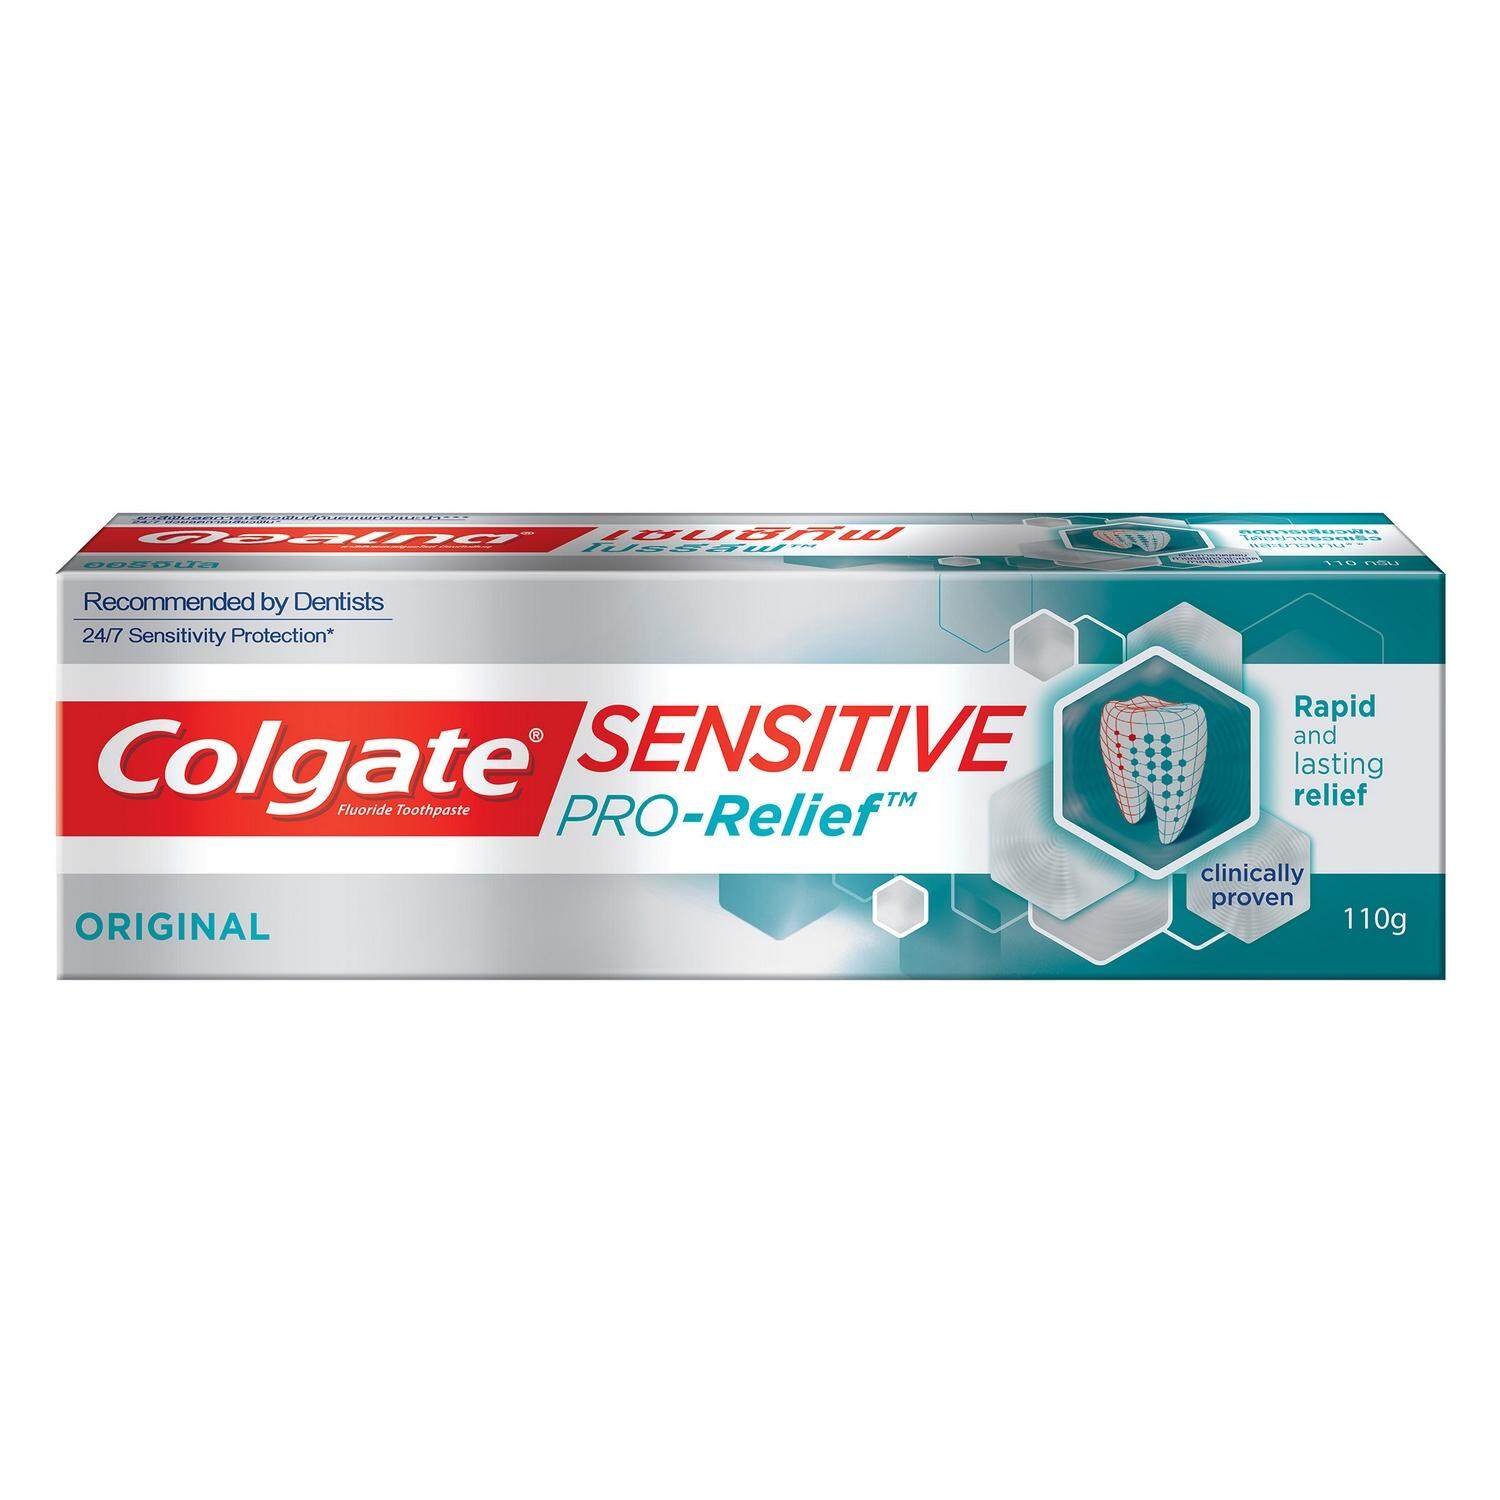 COLGATE ยาสีฟัน คอลเกต เซนซิทีฟ โปรรีลีฟ ออริจินัล 110 กรัม แพ็คเดี่ยว (ครีม) (Oral,Oral Care,Toothpaste,ยาสีฟัน,ดูแลฟัน,ช่องปาก,สุขภาพฟัน) ของแท้